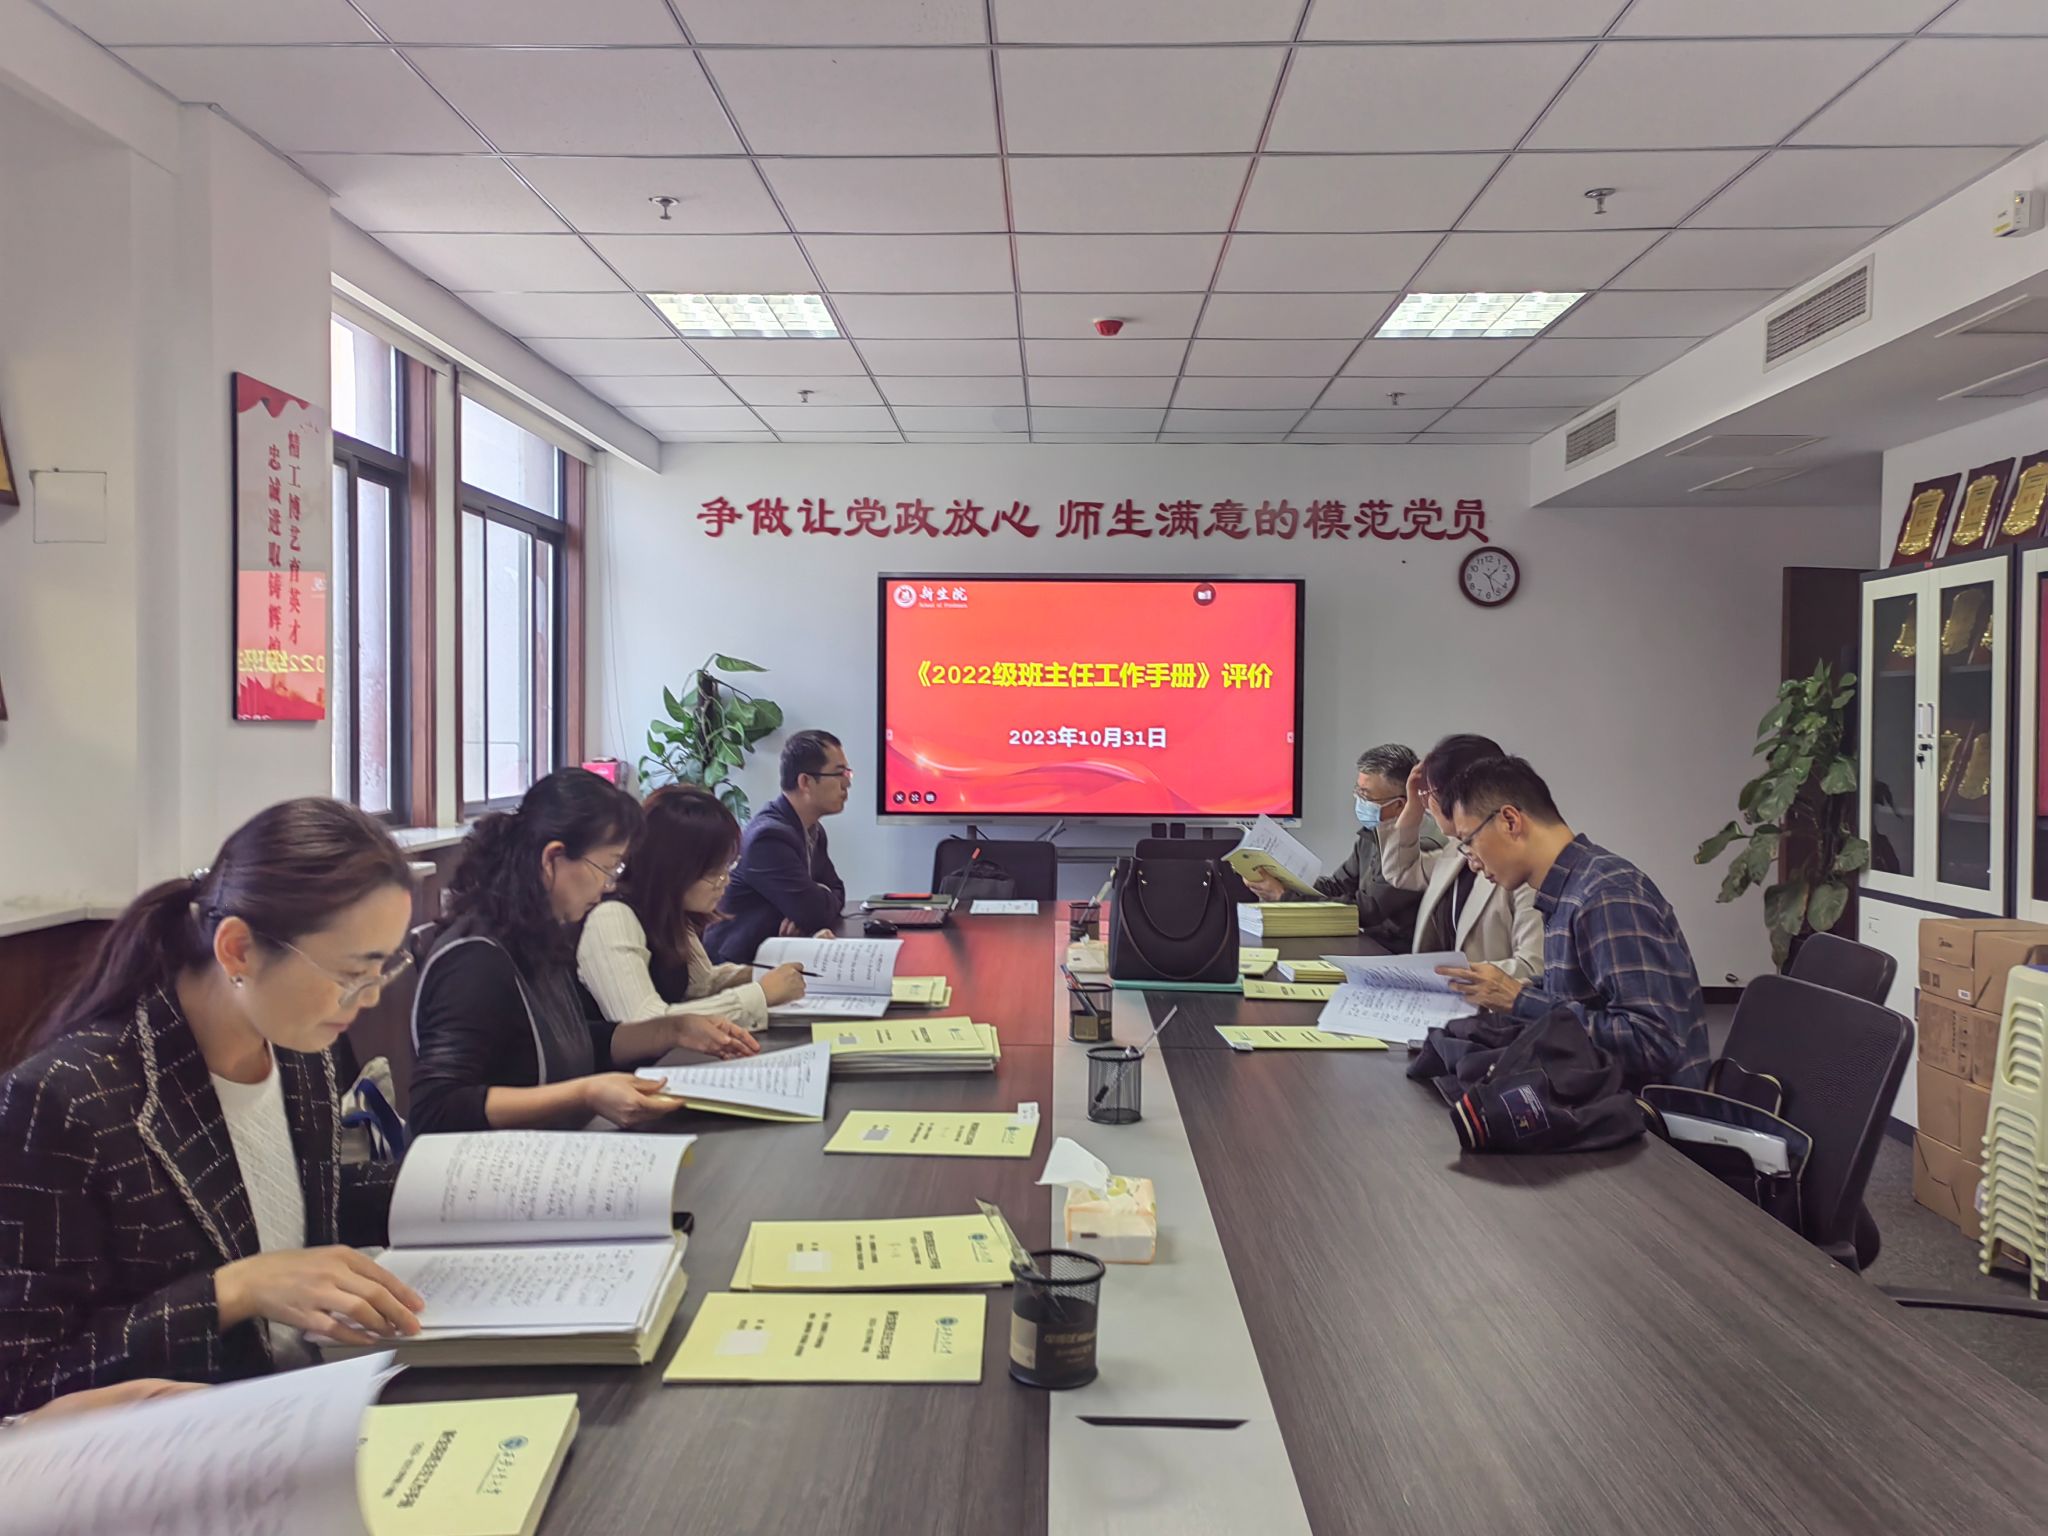 beat365中国在线体育开展《2022级班主任工作手册》评价工作